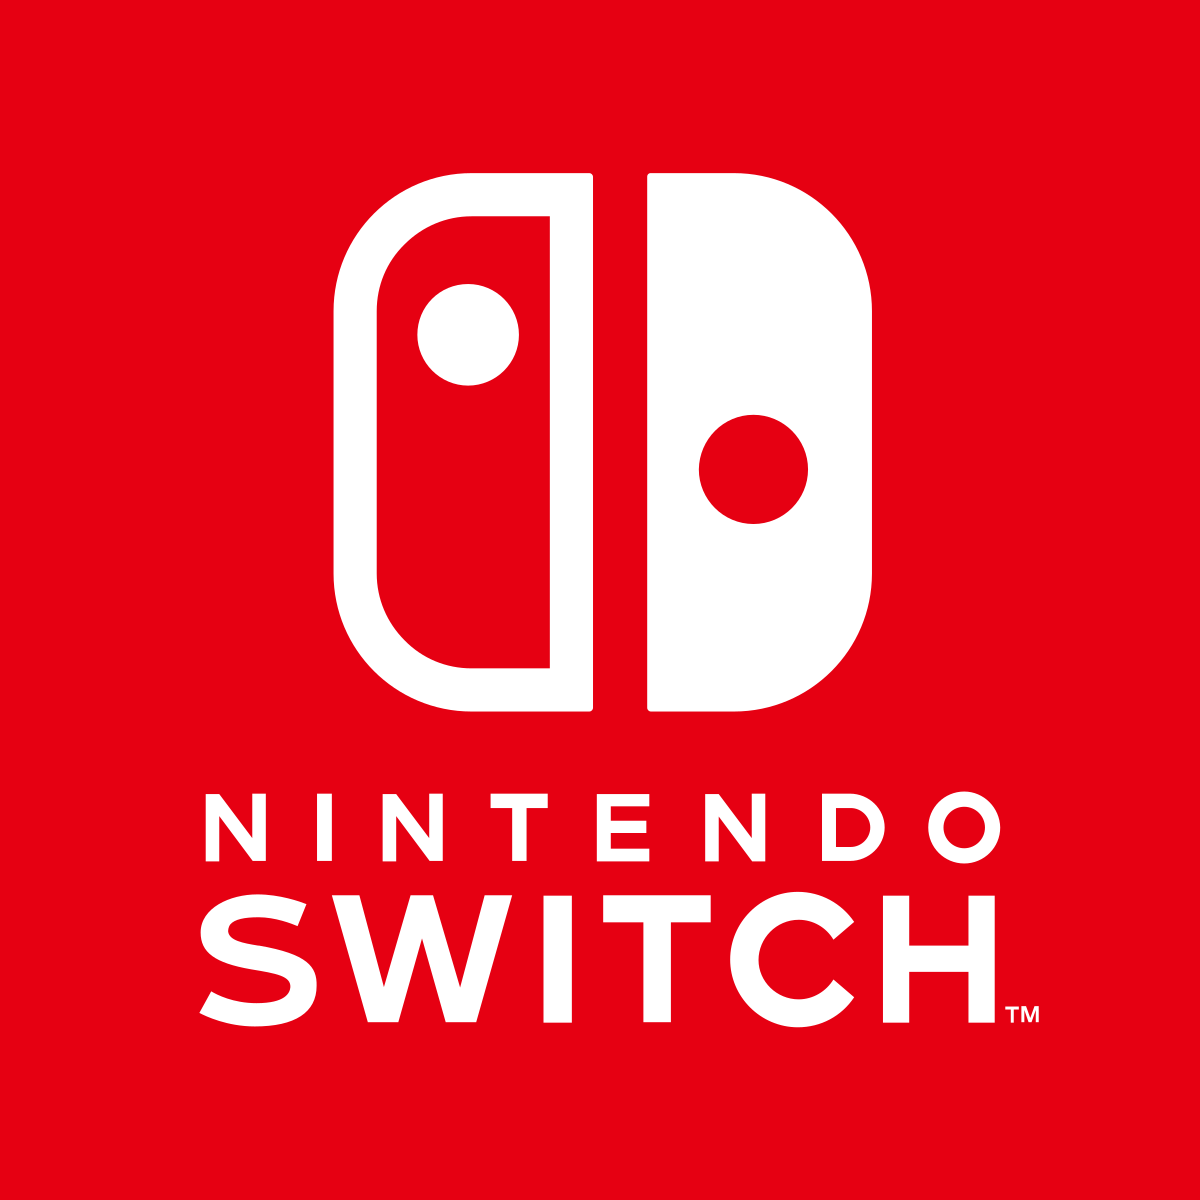 Old Nintendo Logo - Nintendo Switch